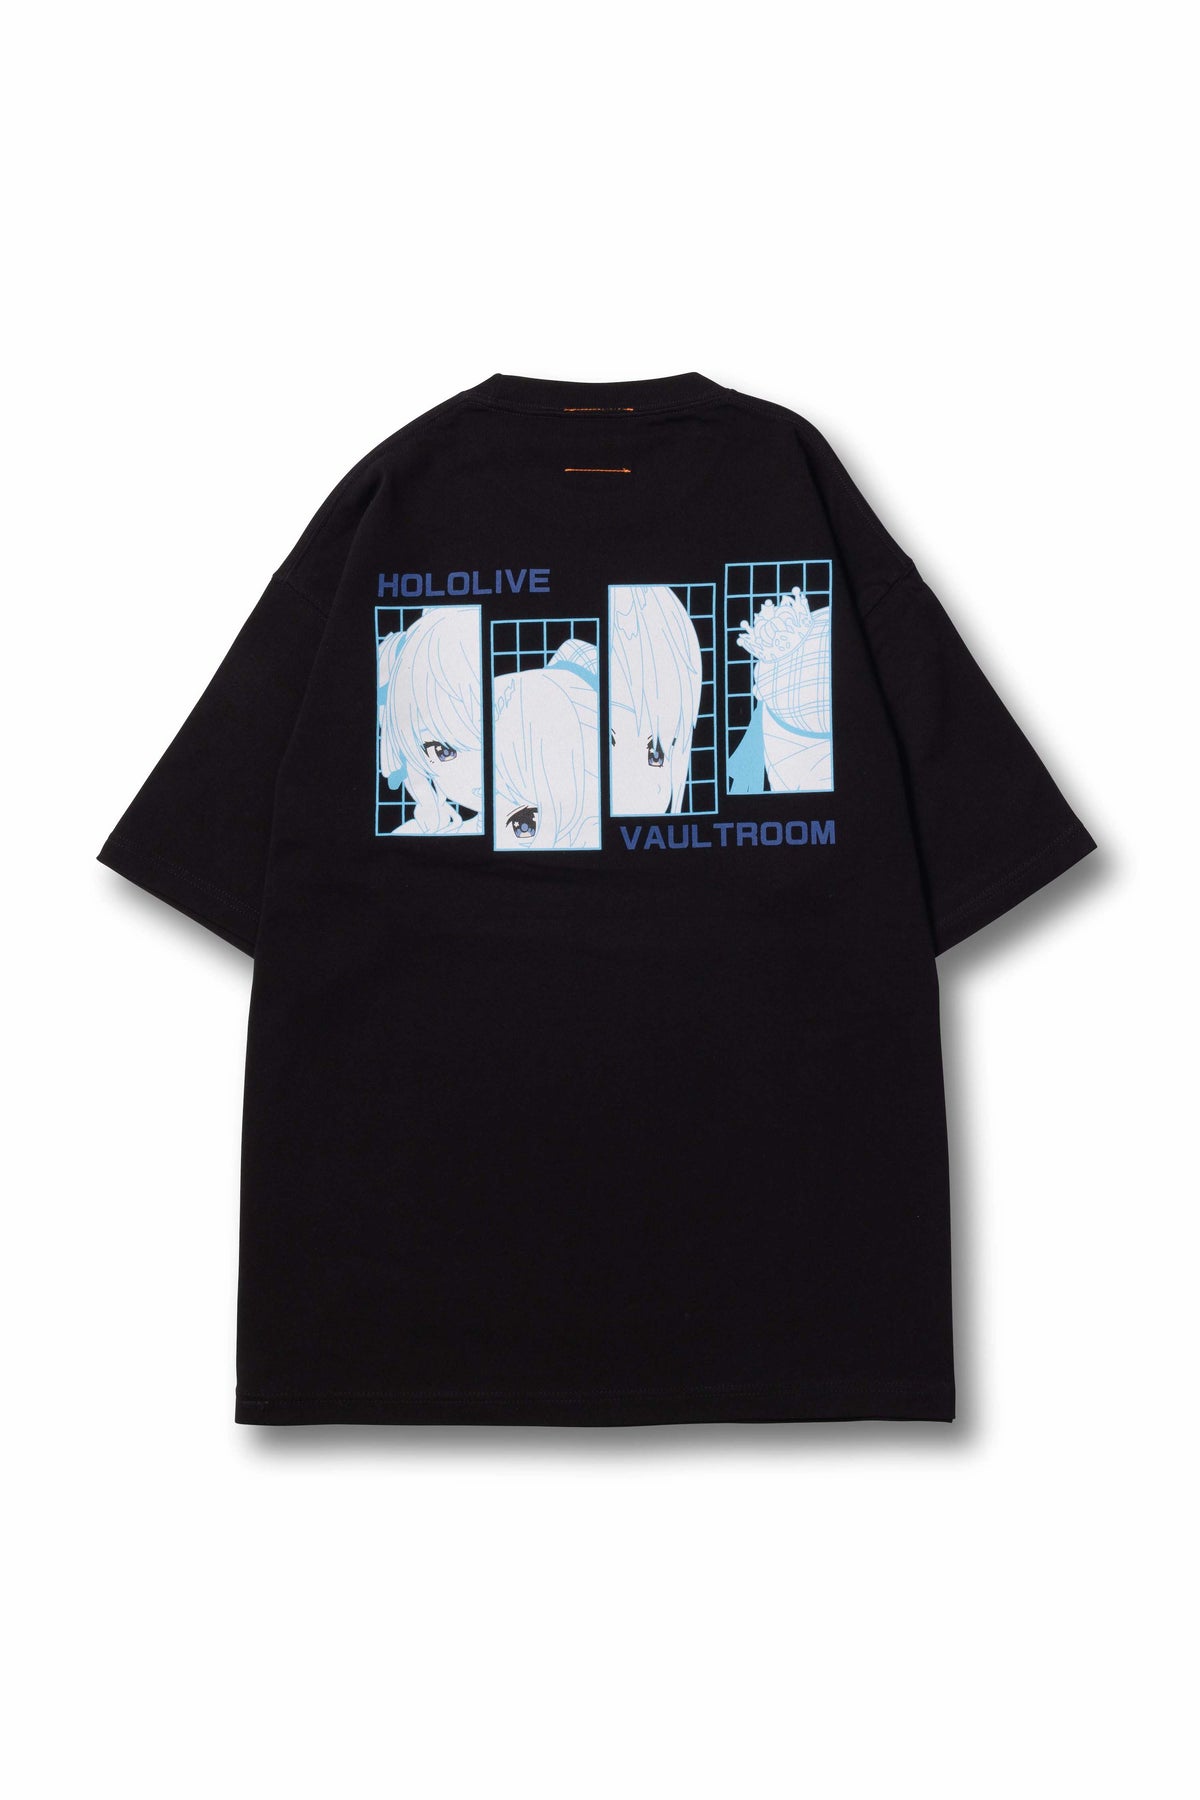 vaultroom HOSHIMACHI SUISEI TEEボルトルーム - Tシャツ/カットソー ...